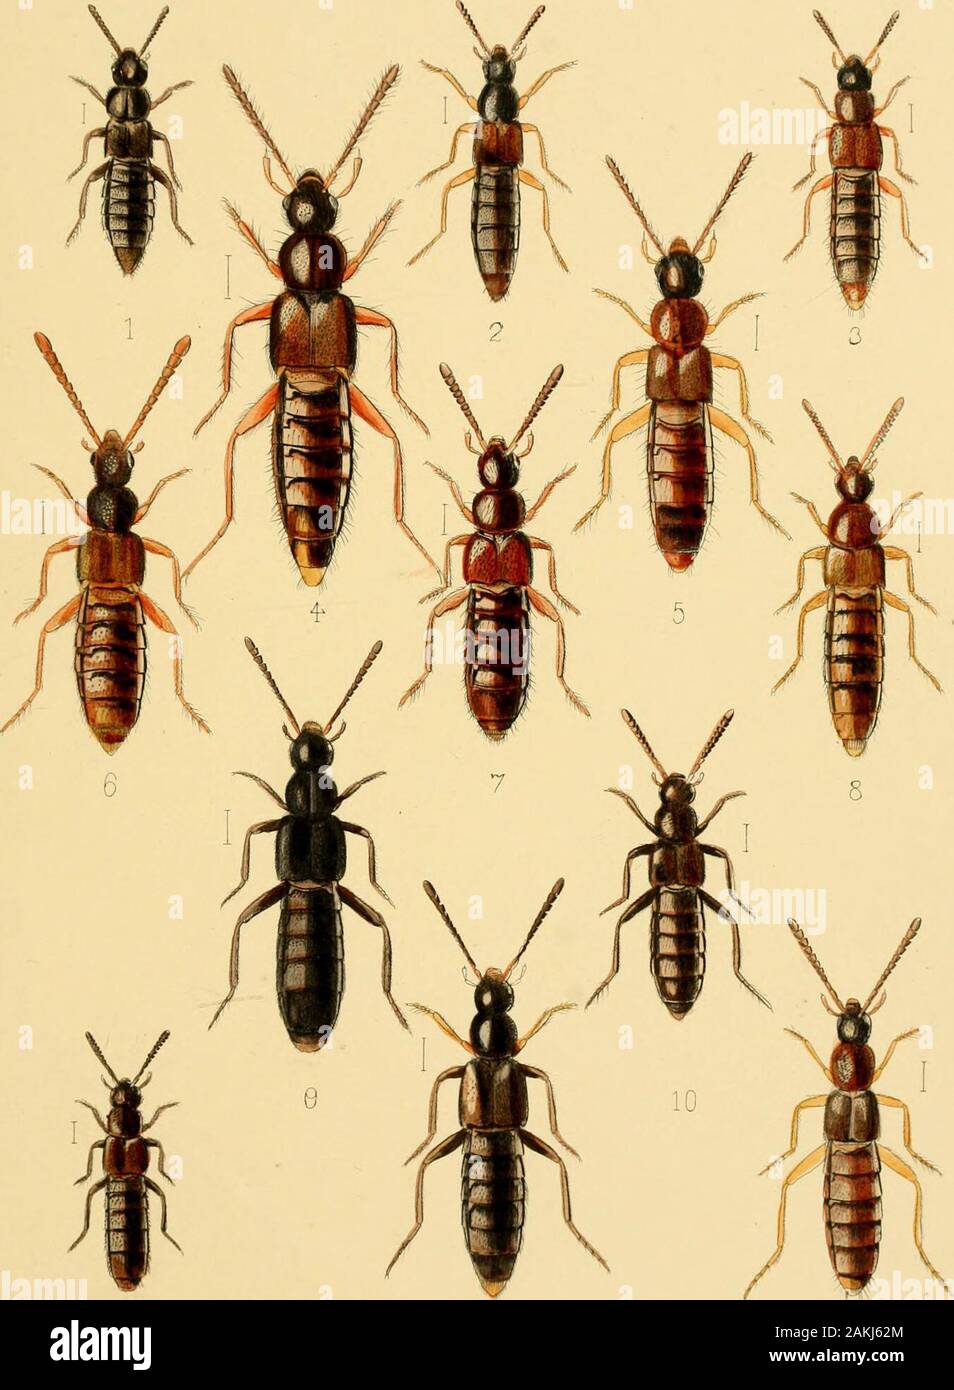 The Coleoptera of the British islandsA descriptive account of the families, genera, and species indigenous to Great Britain and Ireland, with notes as to localities, habitats, etc .  11. „ umbrosa, JSr. 12. Chilopora longitareis, Er. 13. „ rubicunda, Er. PLATE 40.. 11 12 10 E.V/ilsonDel. I [h i Imp, Camb Soi - Inst Co L.REEVE &,C0 LONDON. LiL»A PLATE XLI. Fig. 1. Dinarda Maerkeli, Kies. 2. Atemeles emarginatus, Grat*. 3. ) ! paradoxus, Grav. 4. Myi •medonia Haworthi, Steph. 5. jj collaris, Payh. 6. »5 humeralisj Gi^av. 7. cognata, MaerJc.funesta, Grav. 8. ^3J) 9. J? limbata, Fayk. 9a. ^ J, ex Stock Photo